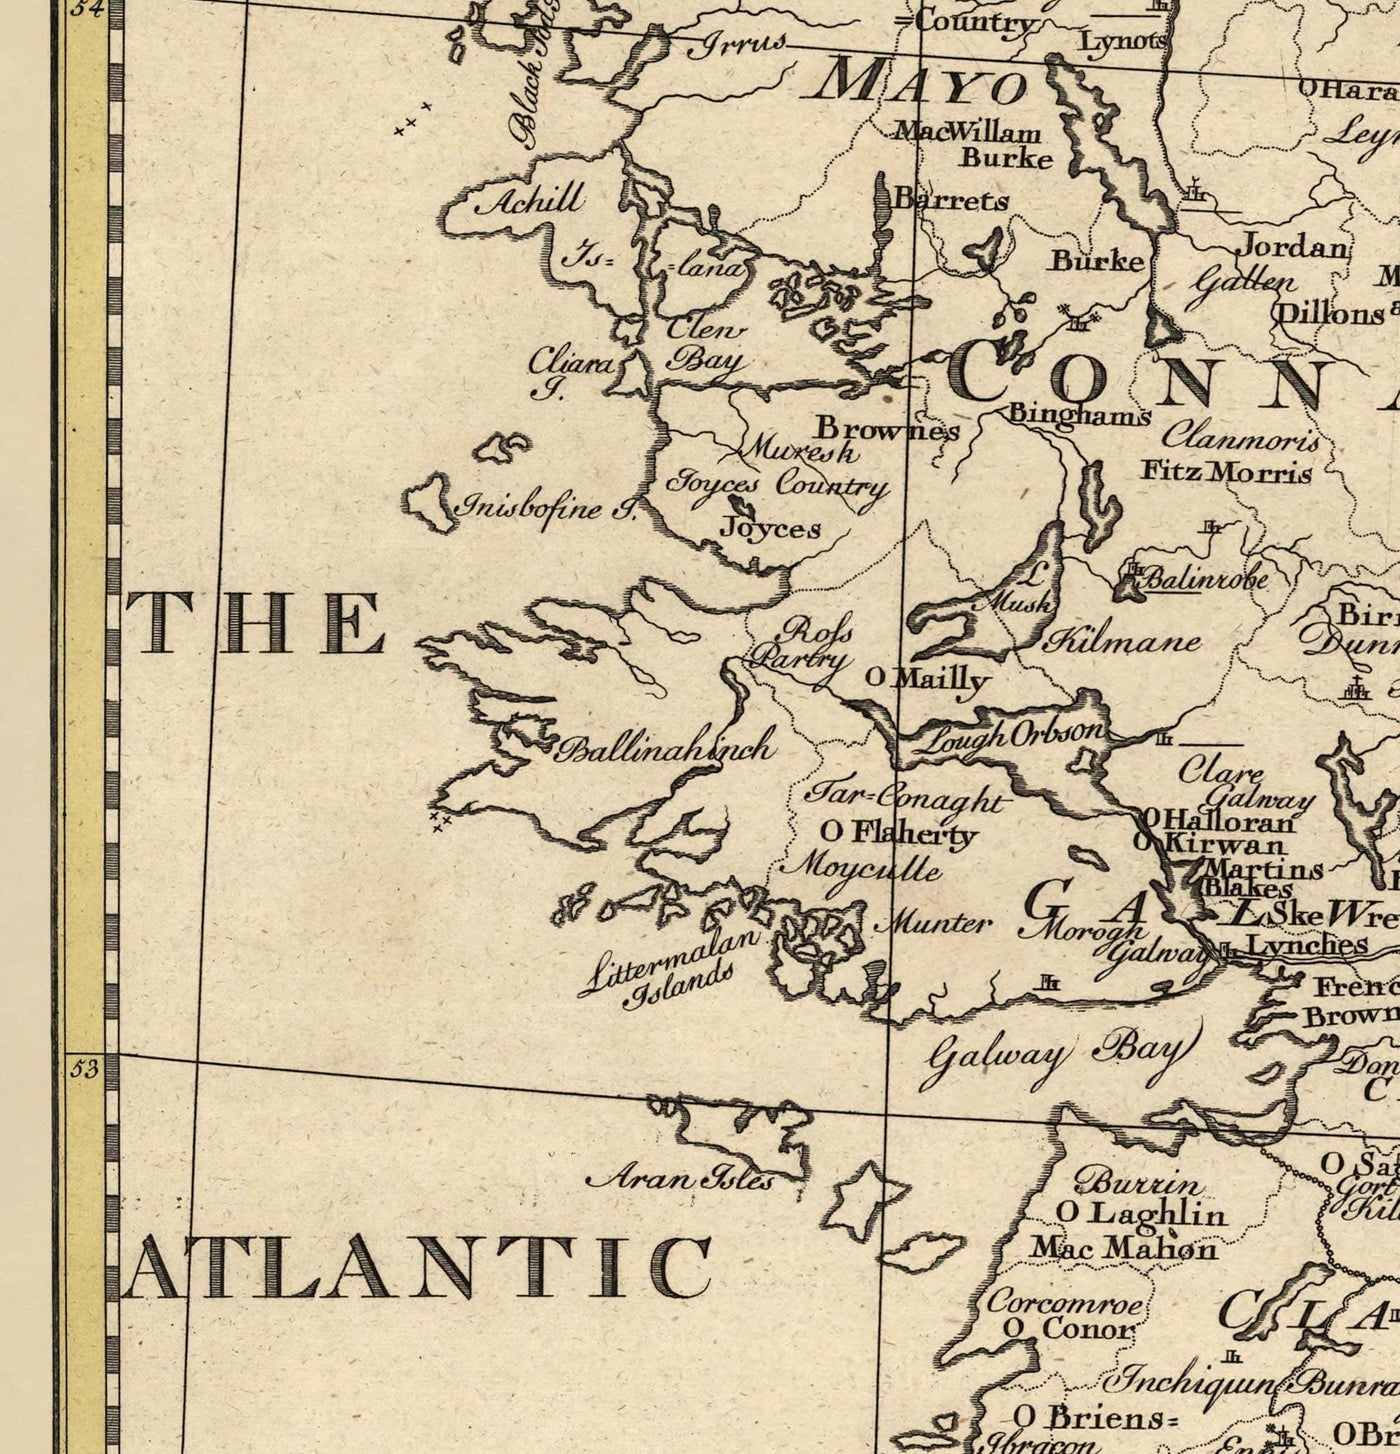 Alte Karte von Irland Familiennamen, 1795 - O'Neill, O'Brien, O'Leary, O'Sullivan, O'Conor, O'Flaherty, O'Dowd, etc